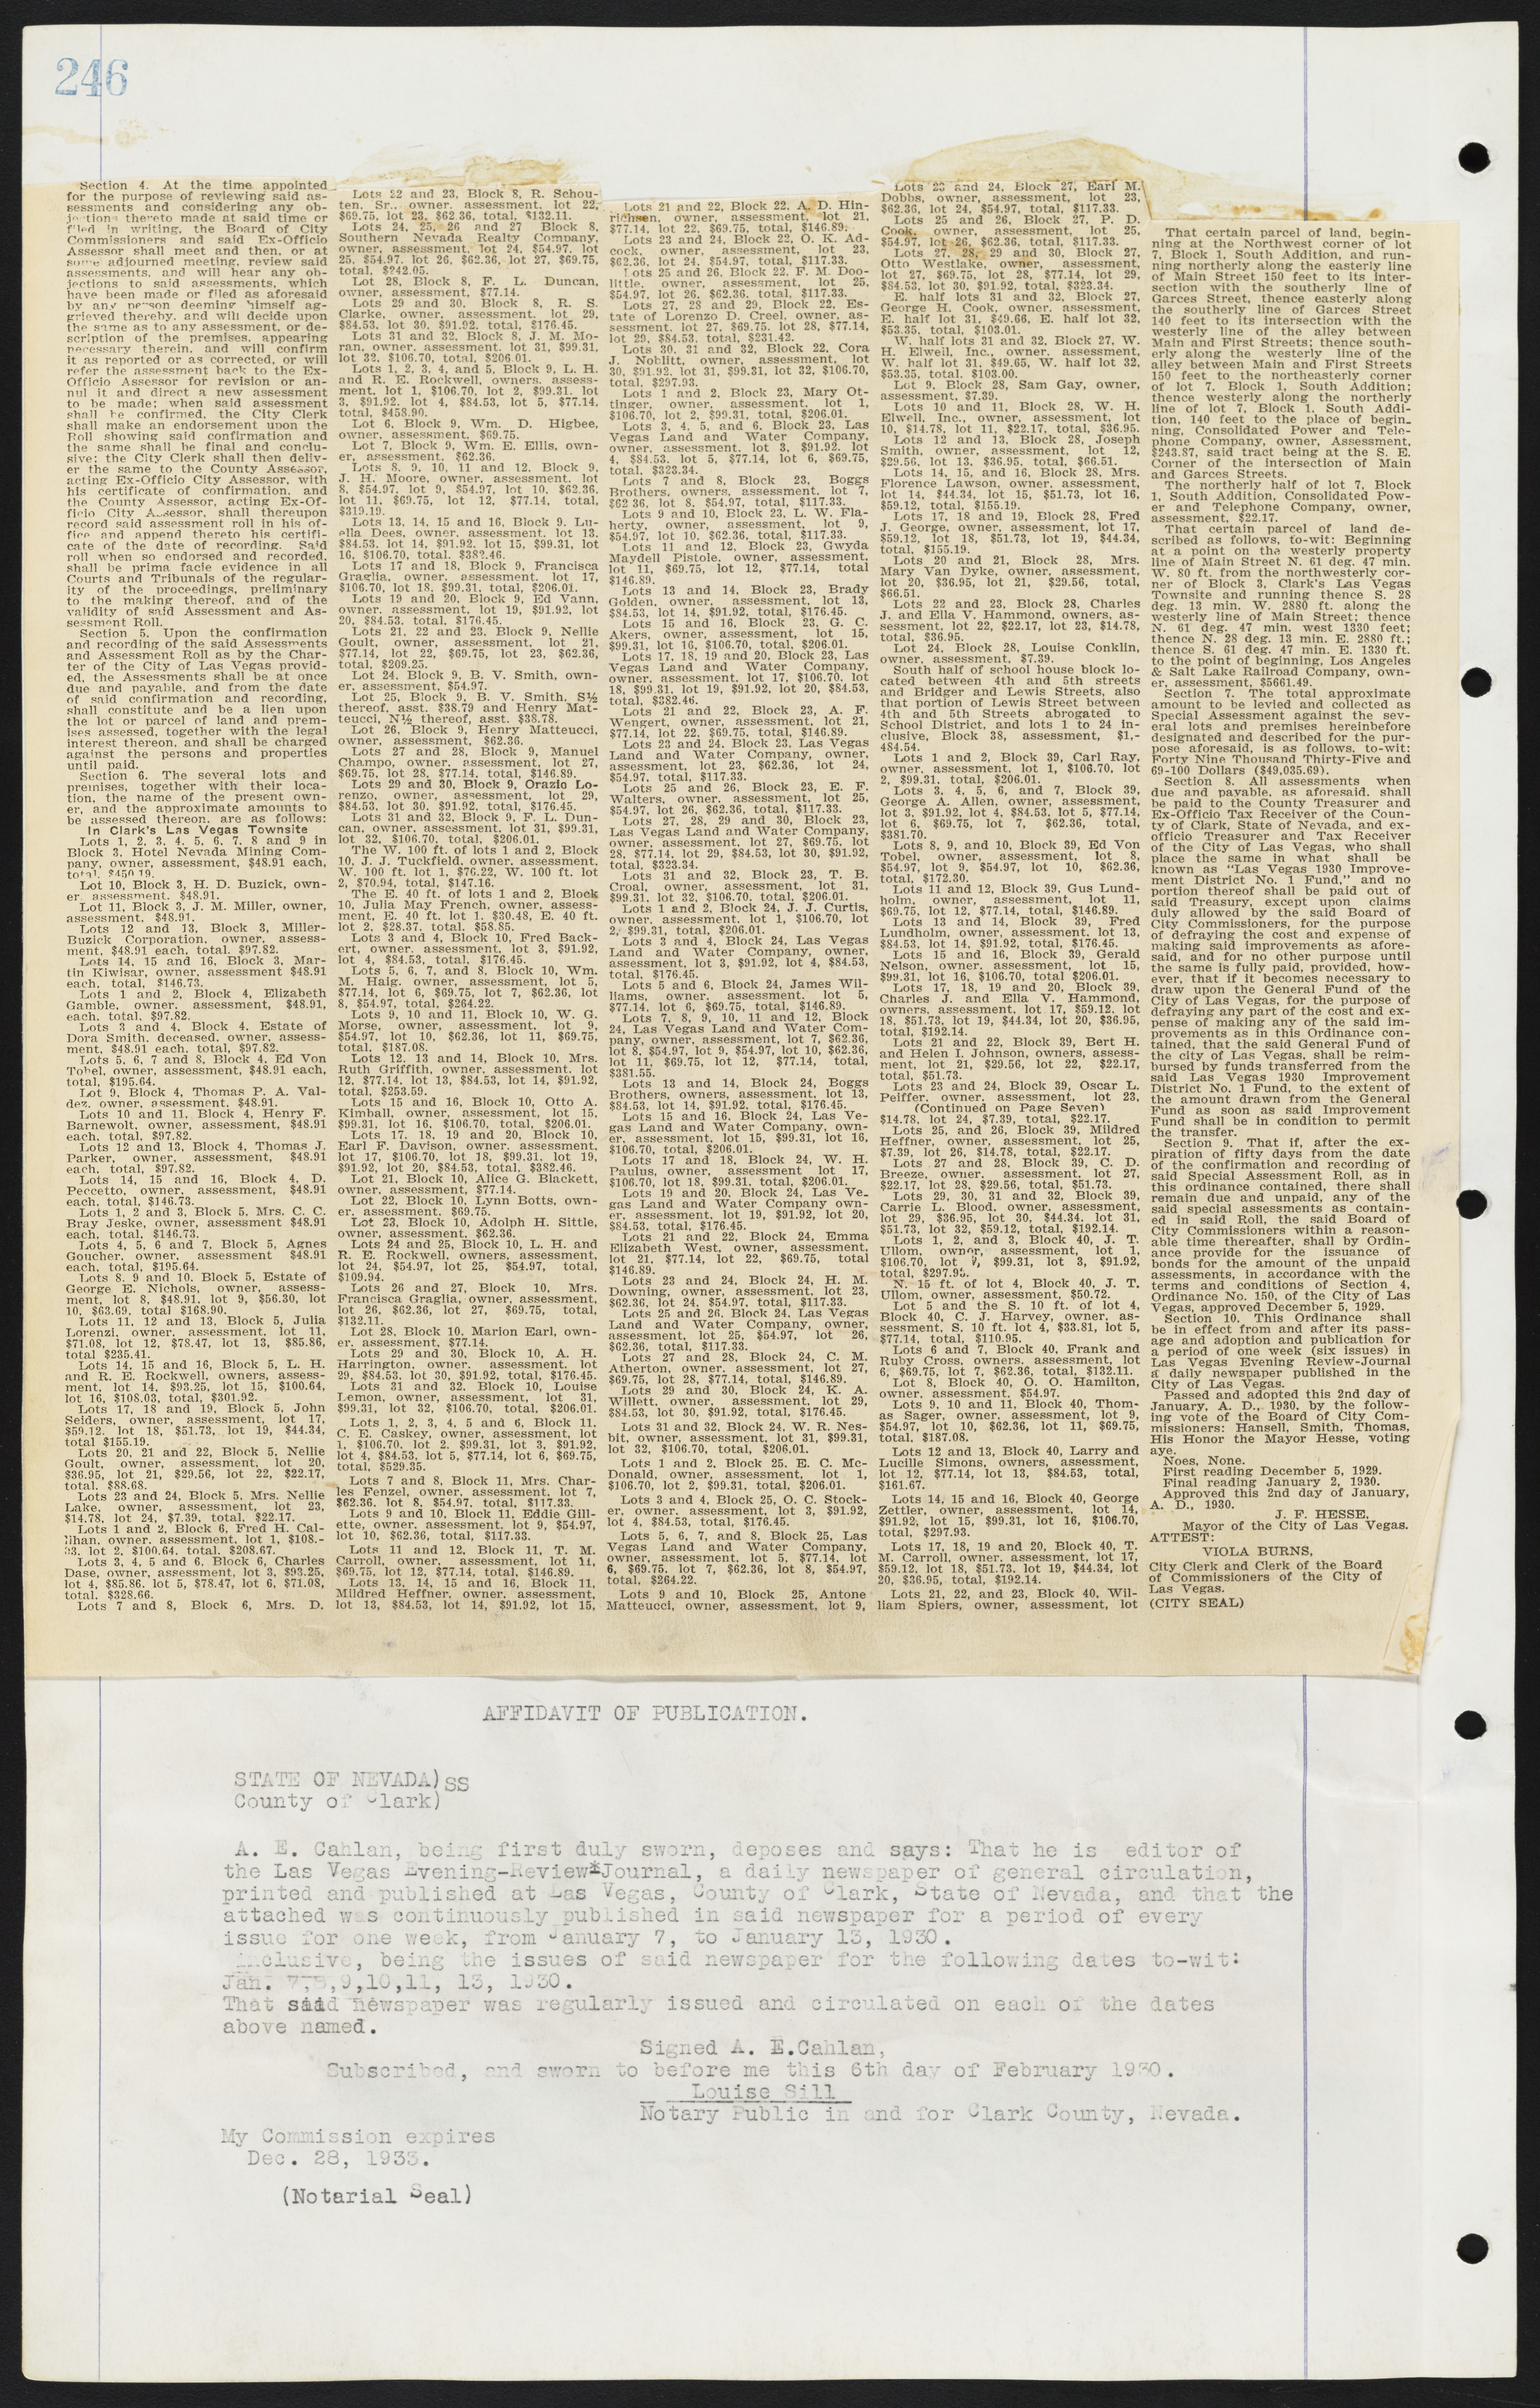 Las Vegas City Ordinances, July 18, 1911 to March 31, 1933, lvc000013-250